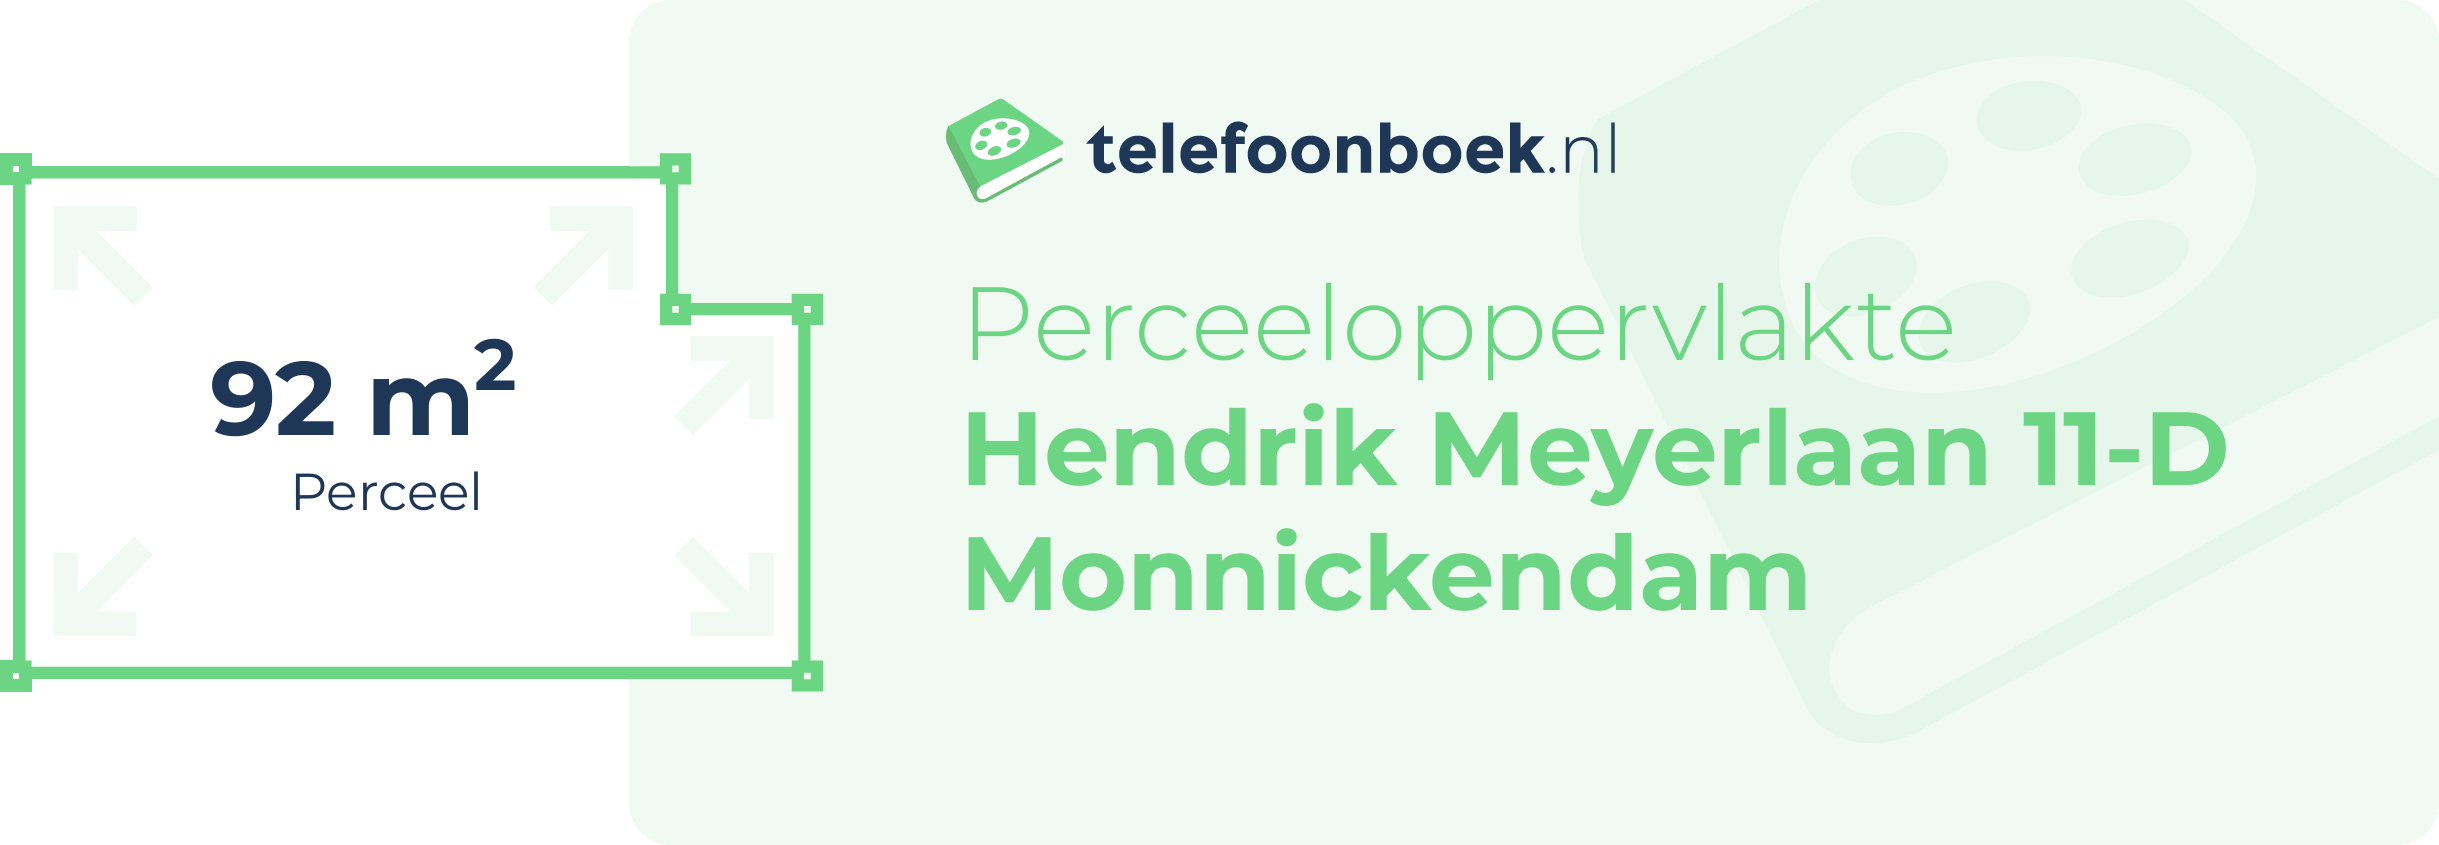 Perceeloppervlakte Hendrik Meyerlaan 11-D Monnickendam